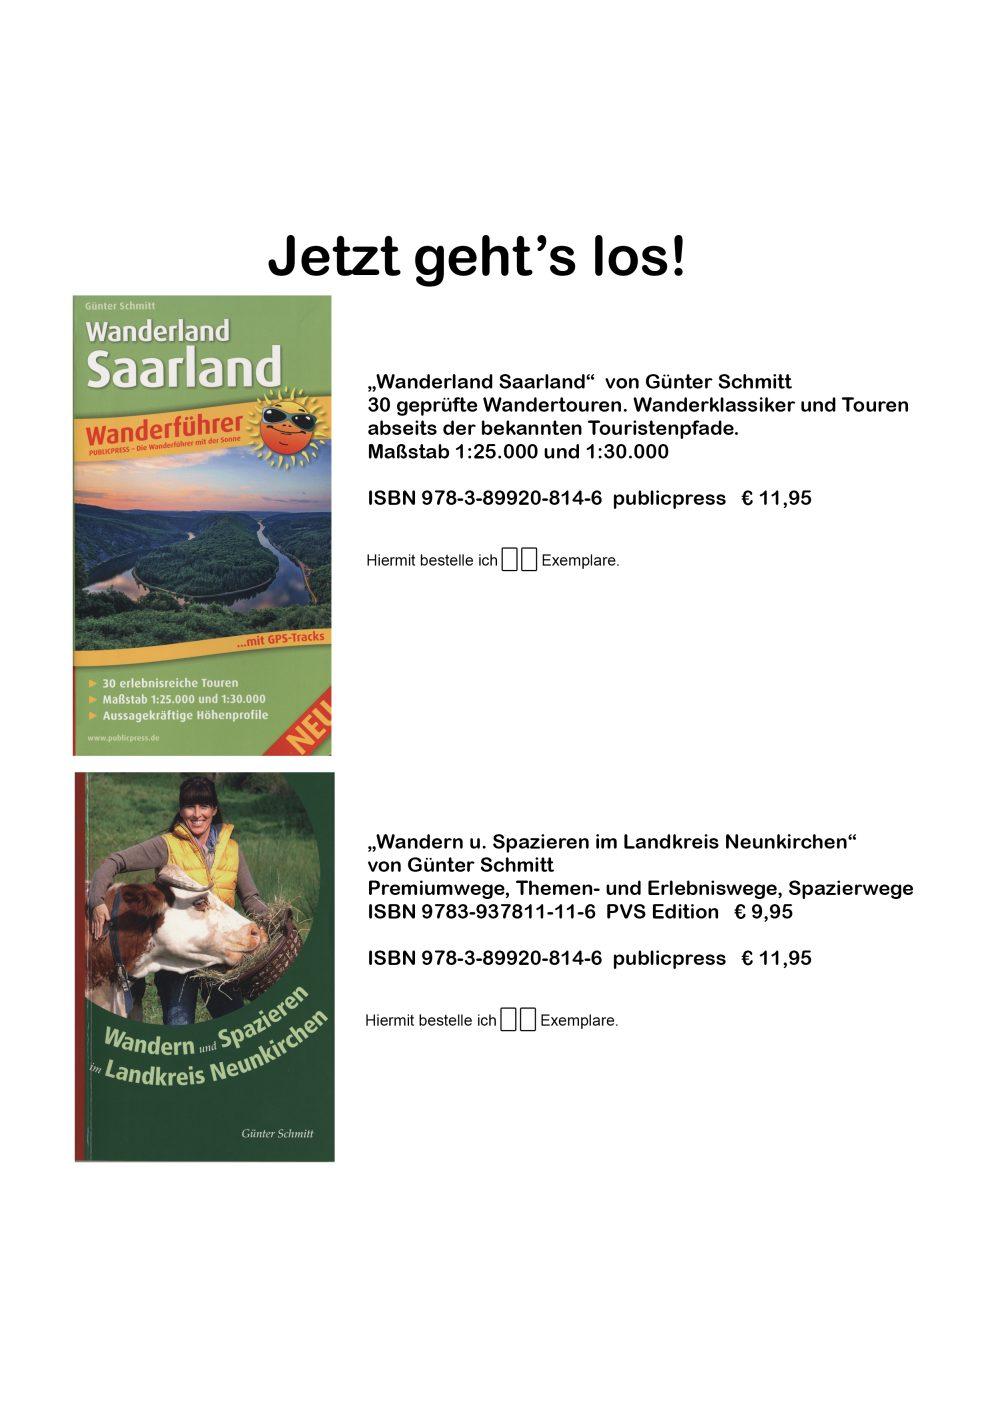 PVS Pressevertrieb Saar Bestellen Sie: Linsenmeier & Klein GmbH Fax: 0 68 06 / 98 52-124 Saarstraße 133 66265